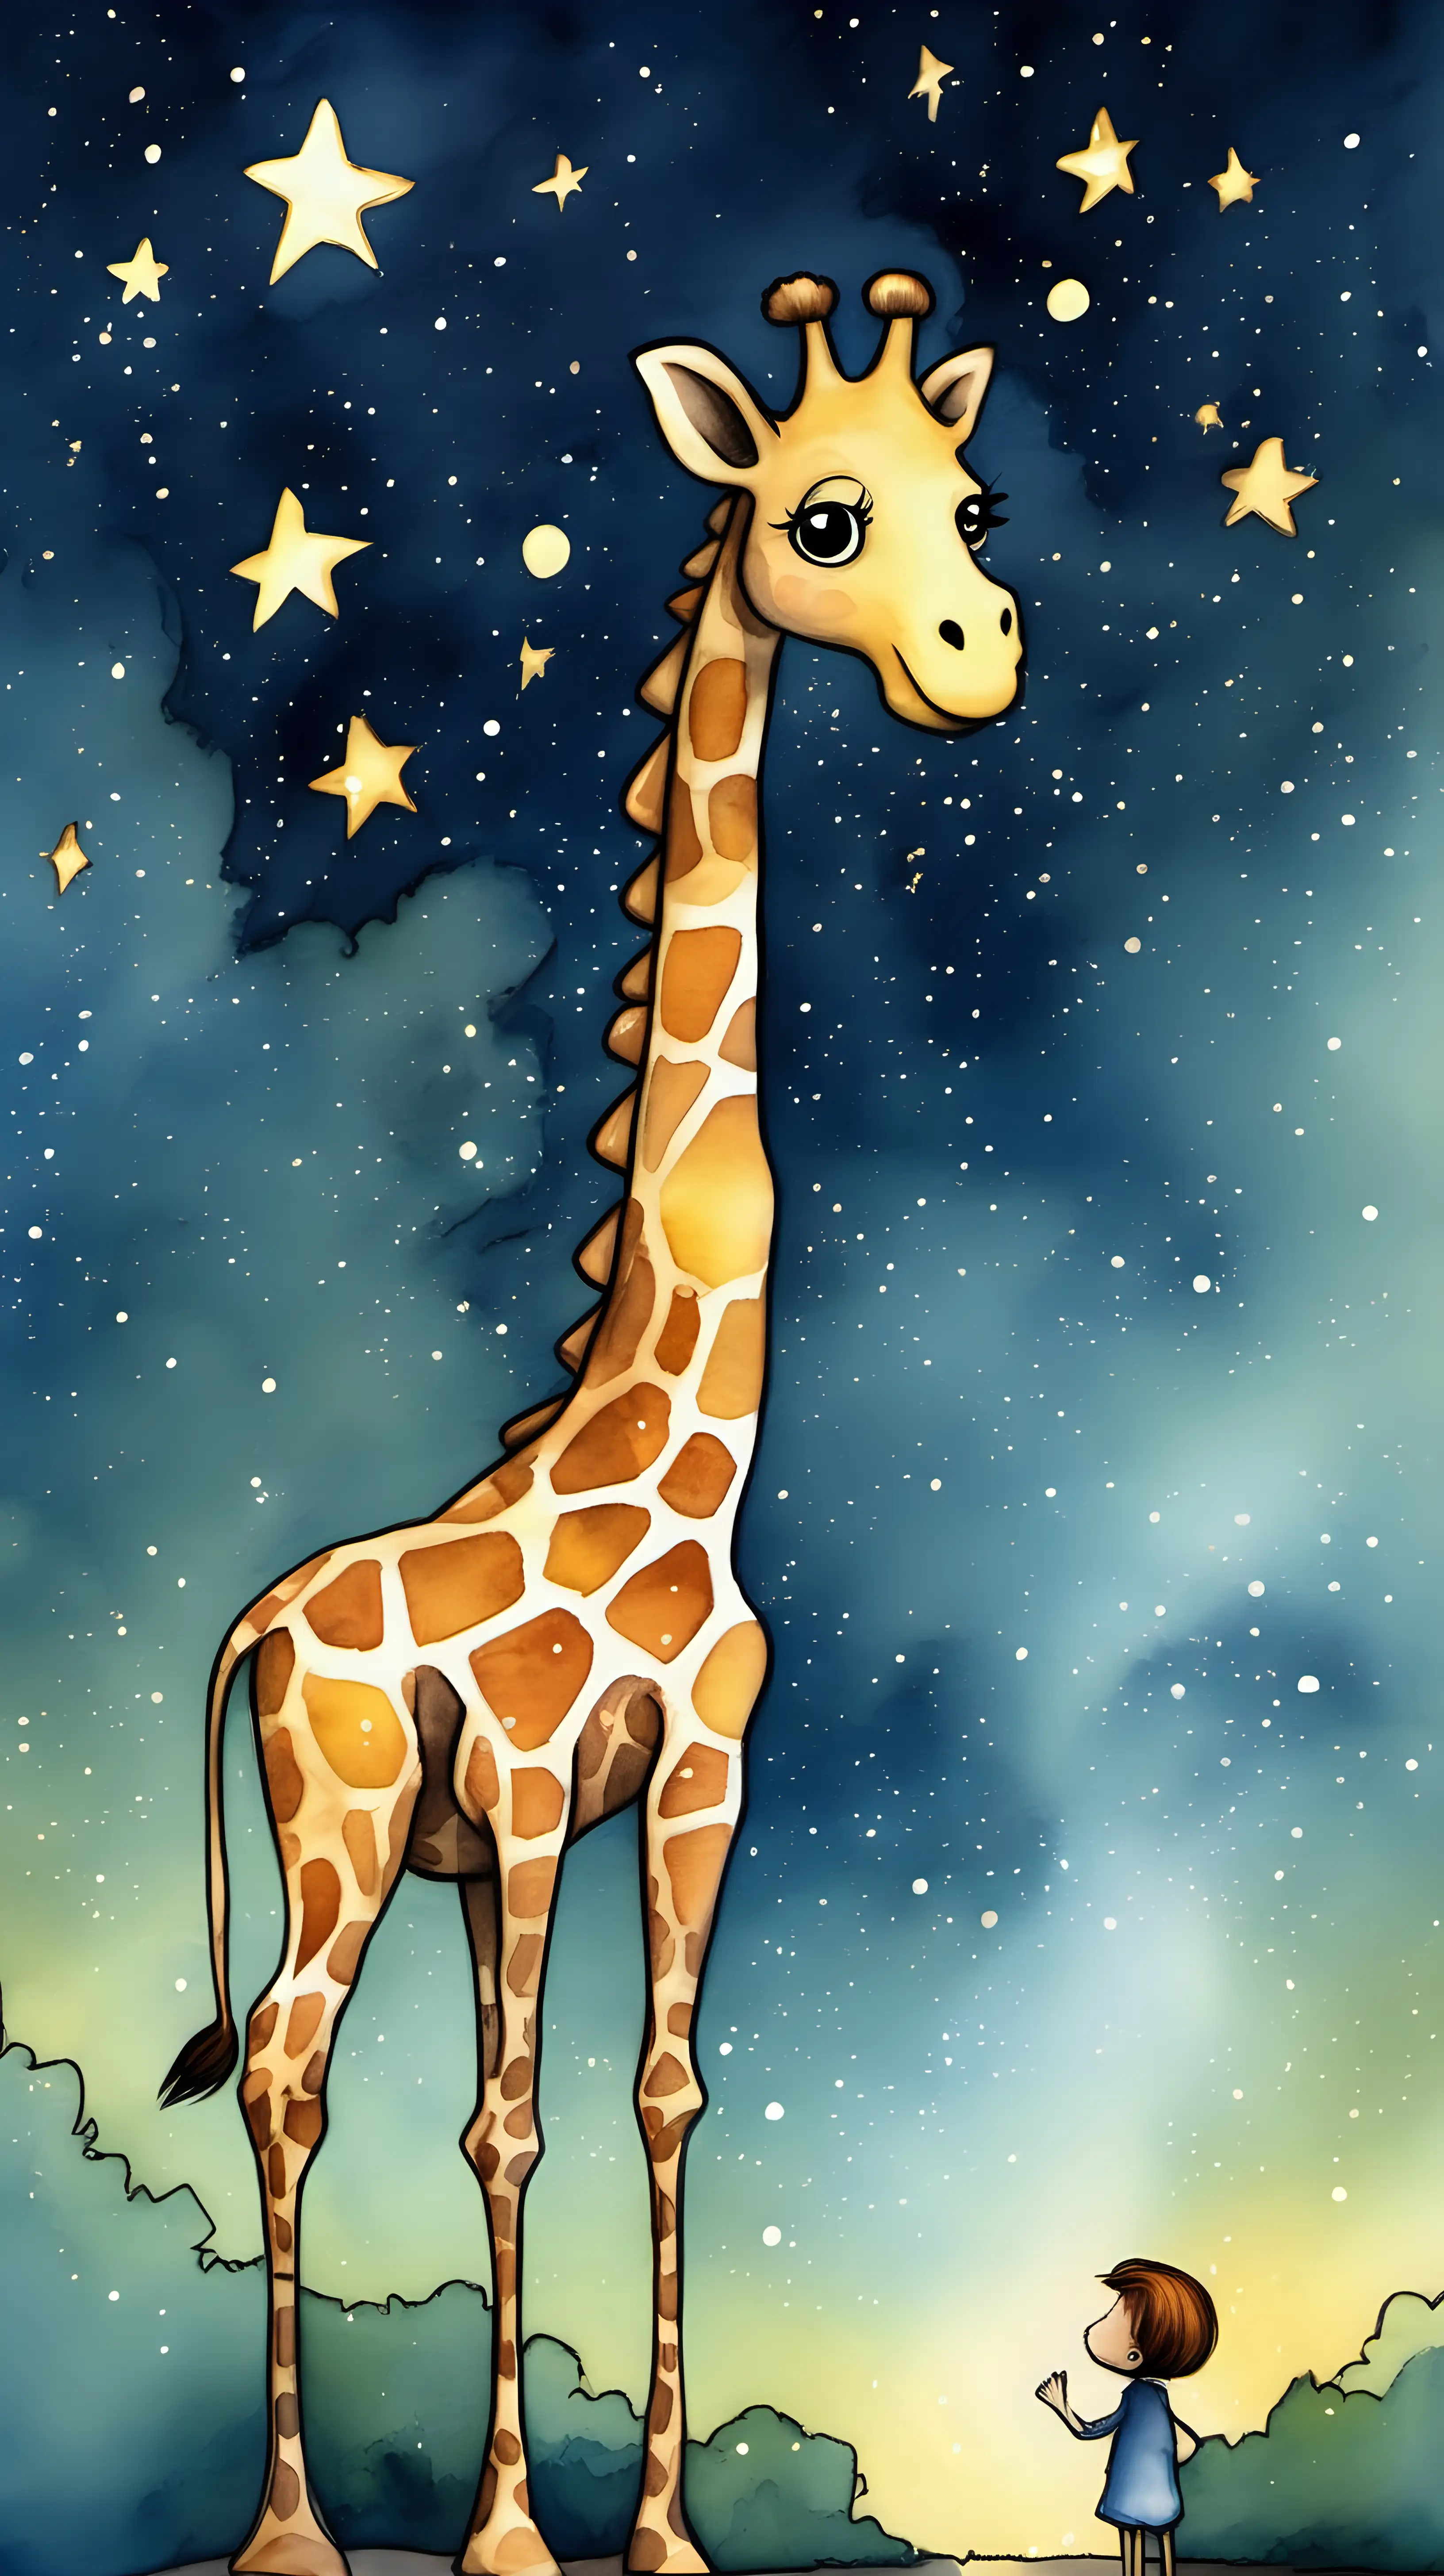 Giraffe Stella Guides a Vulnerable Star Through the Night Sky